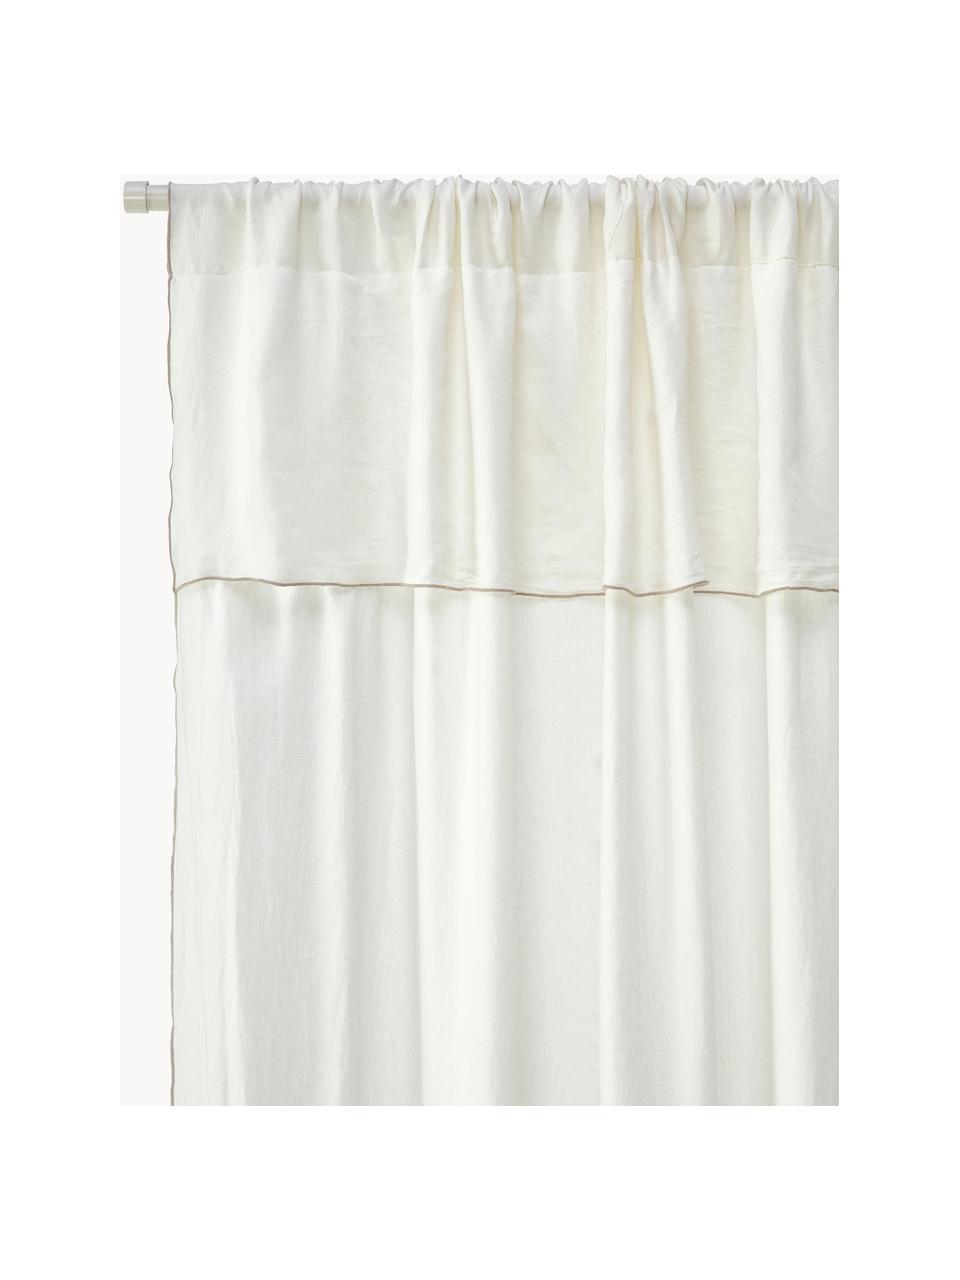 Cortina semitransparente de lino con borlas, cortina blanca